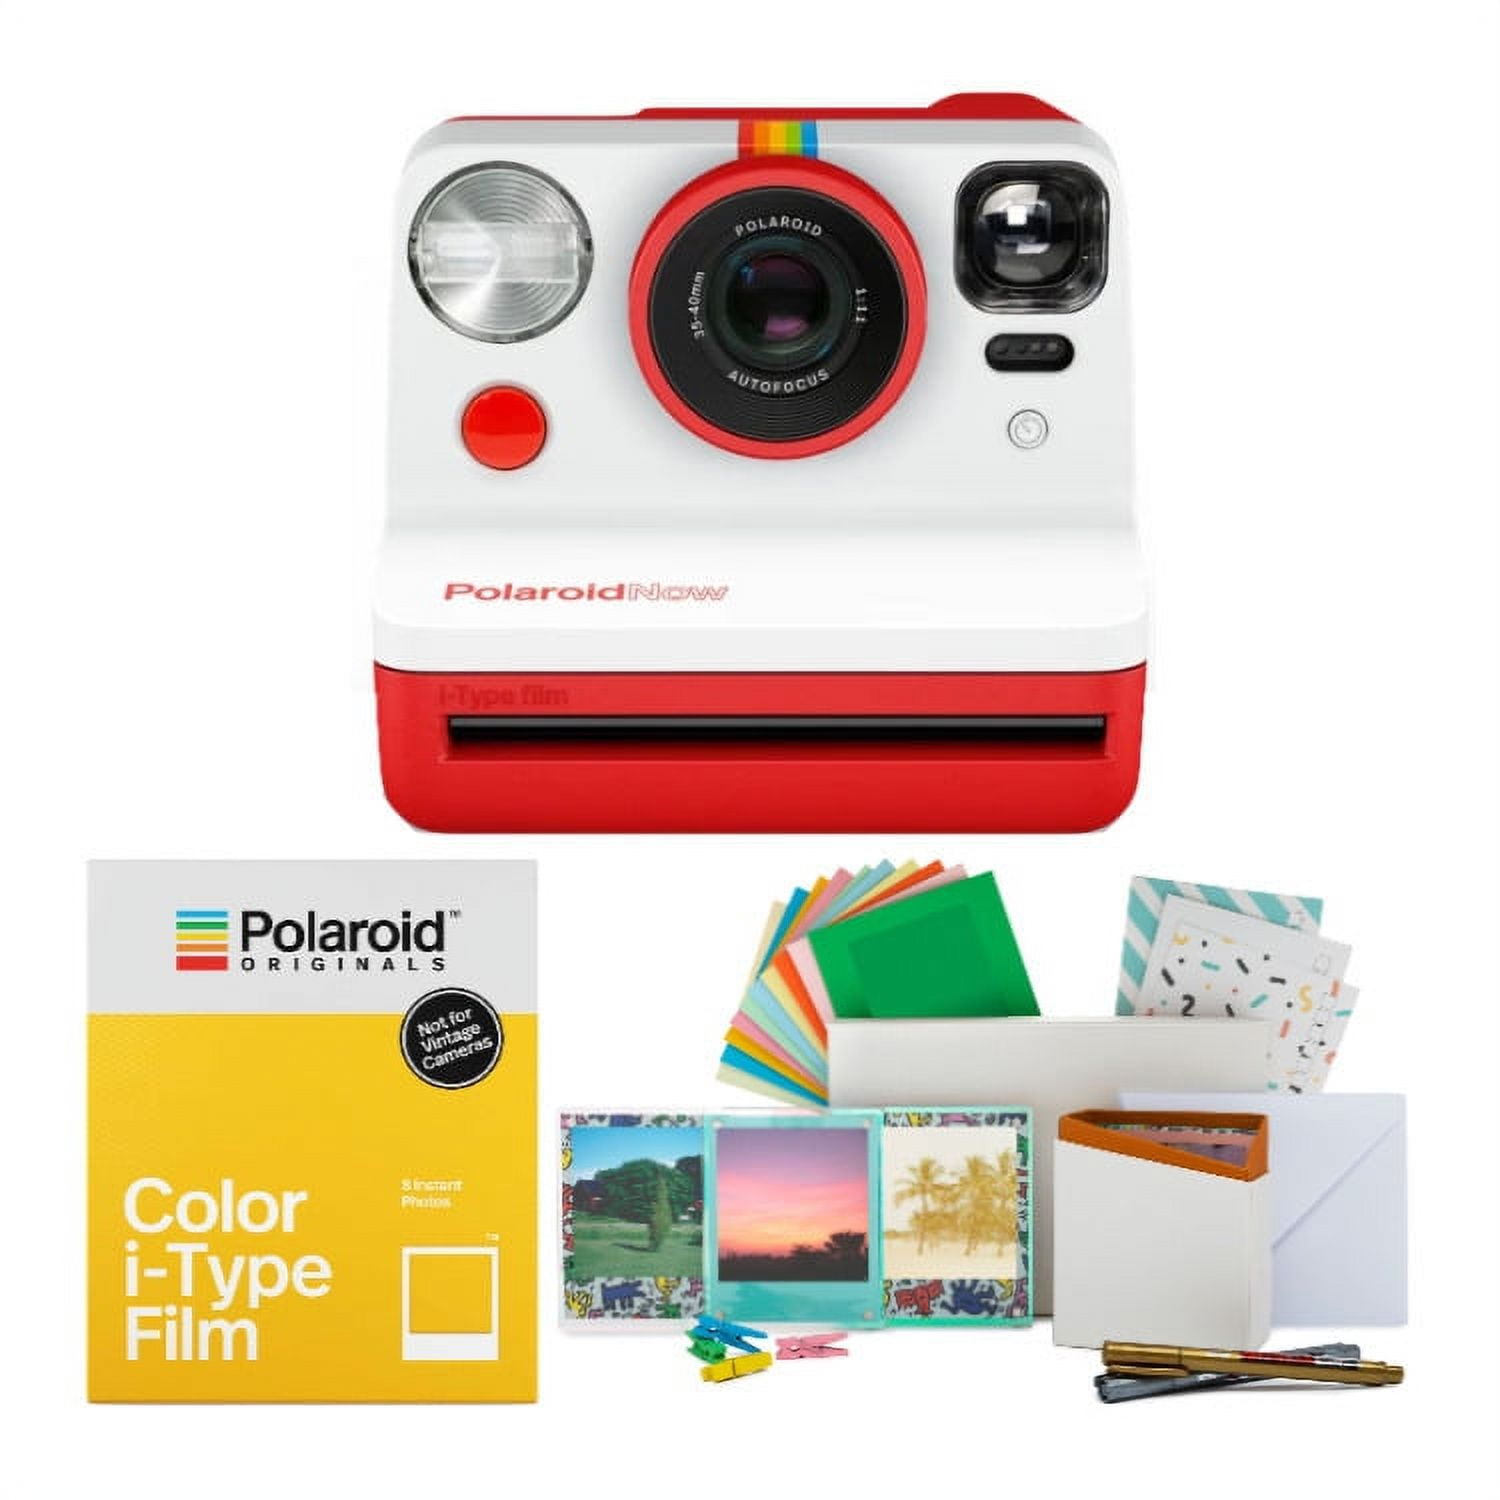 Polaroid 600 Black and White Instant FIlm (6003) - Moment